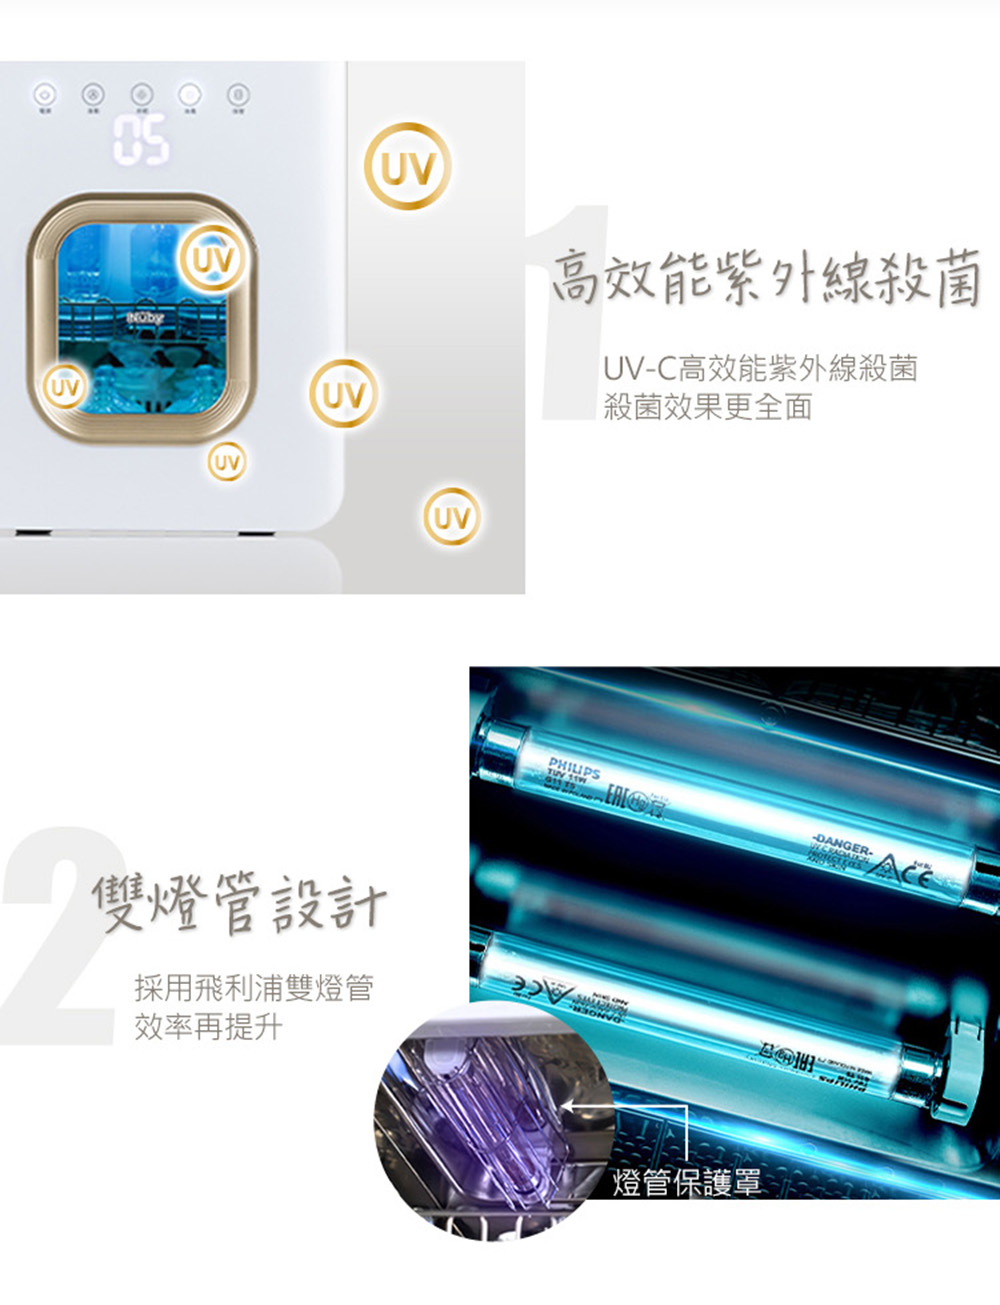 Nuby 智能紫外線殺菌烘乾機(大容量/紫外線/烘乾機)品牌